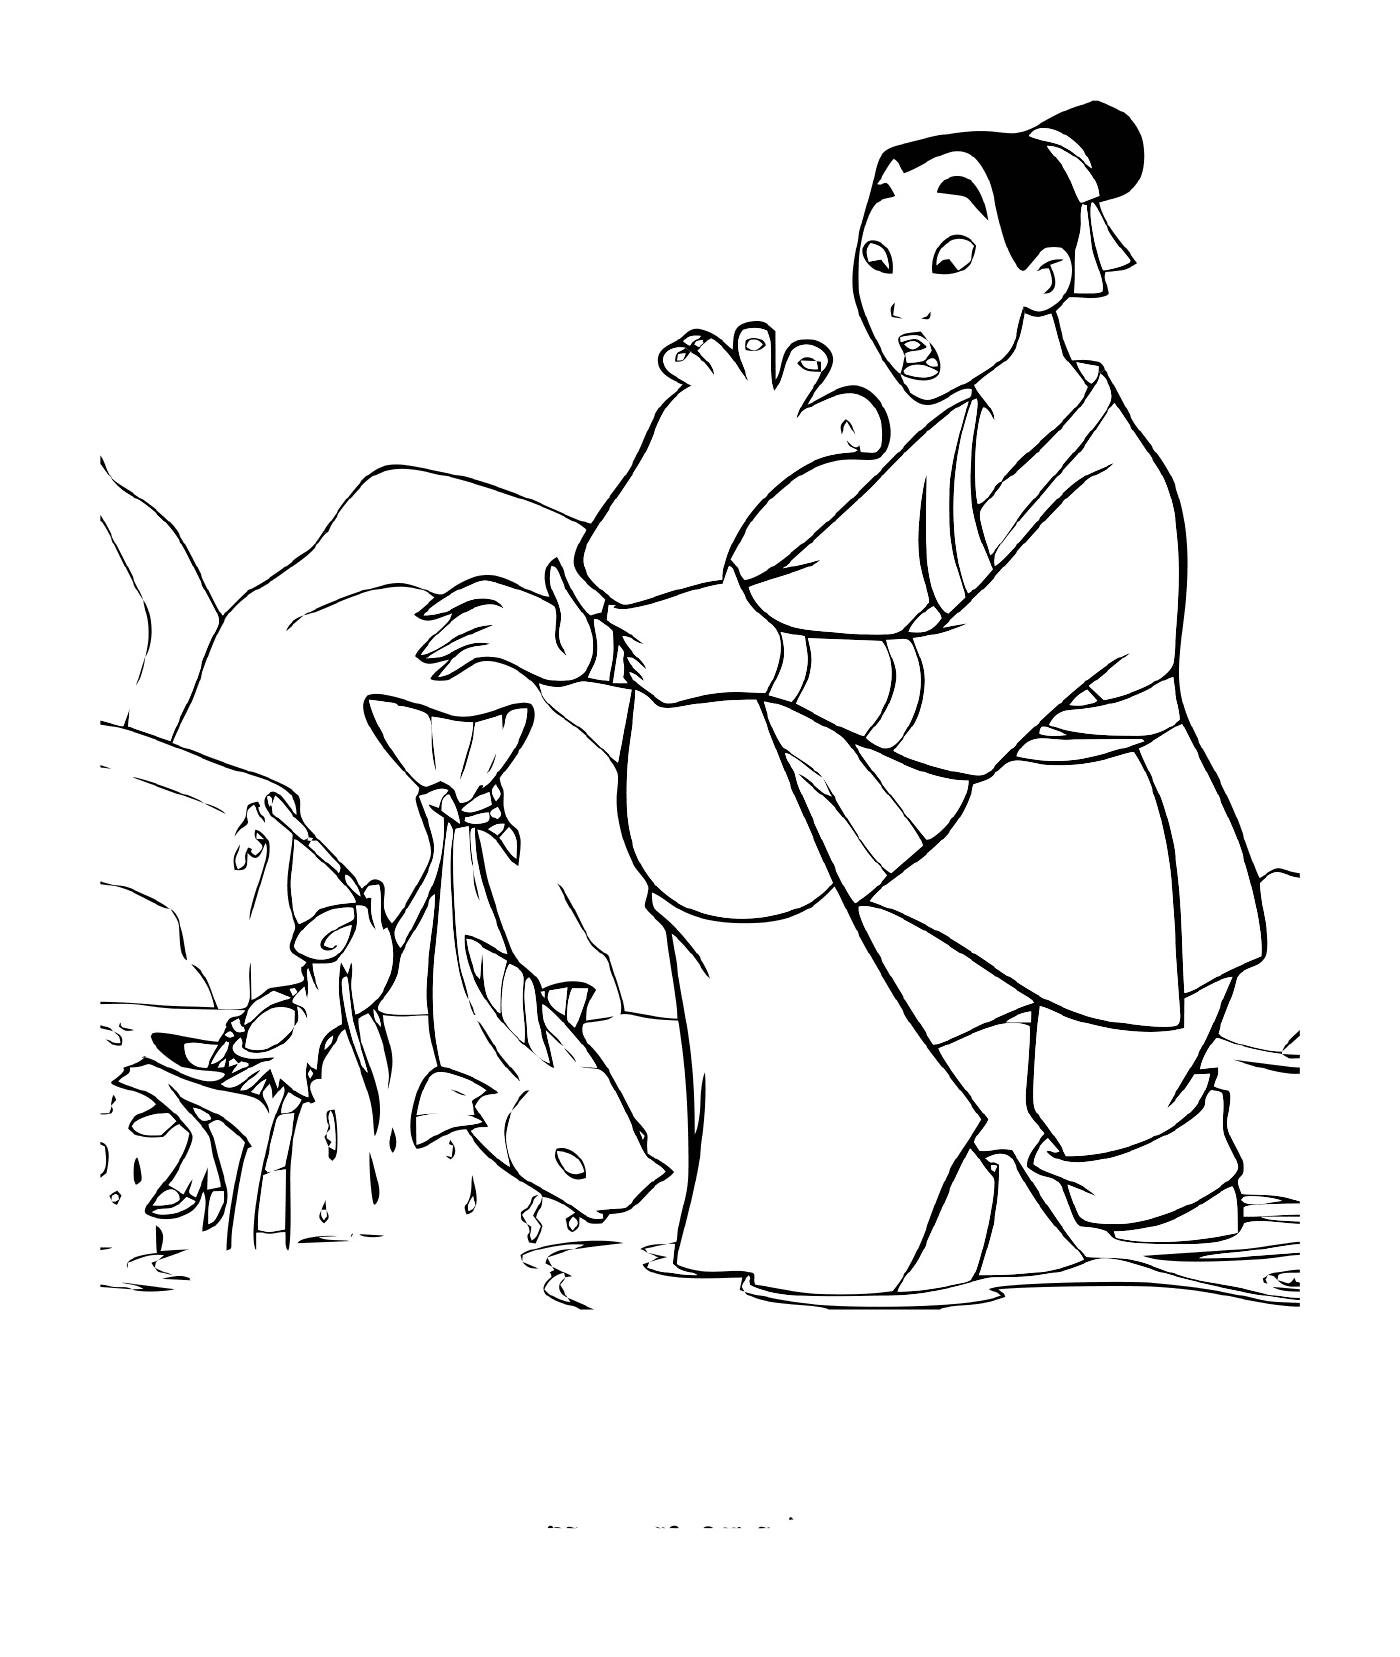  Mulan pesca con Mushu 